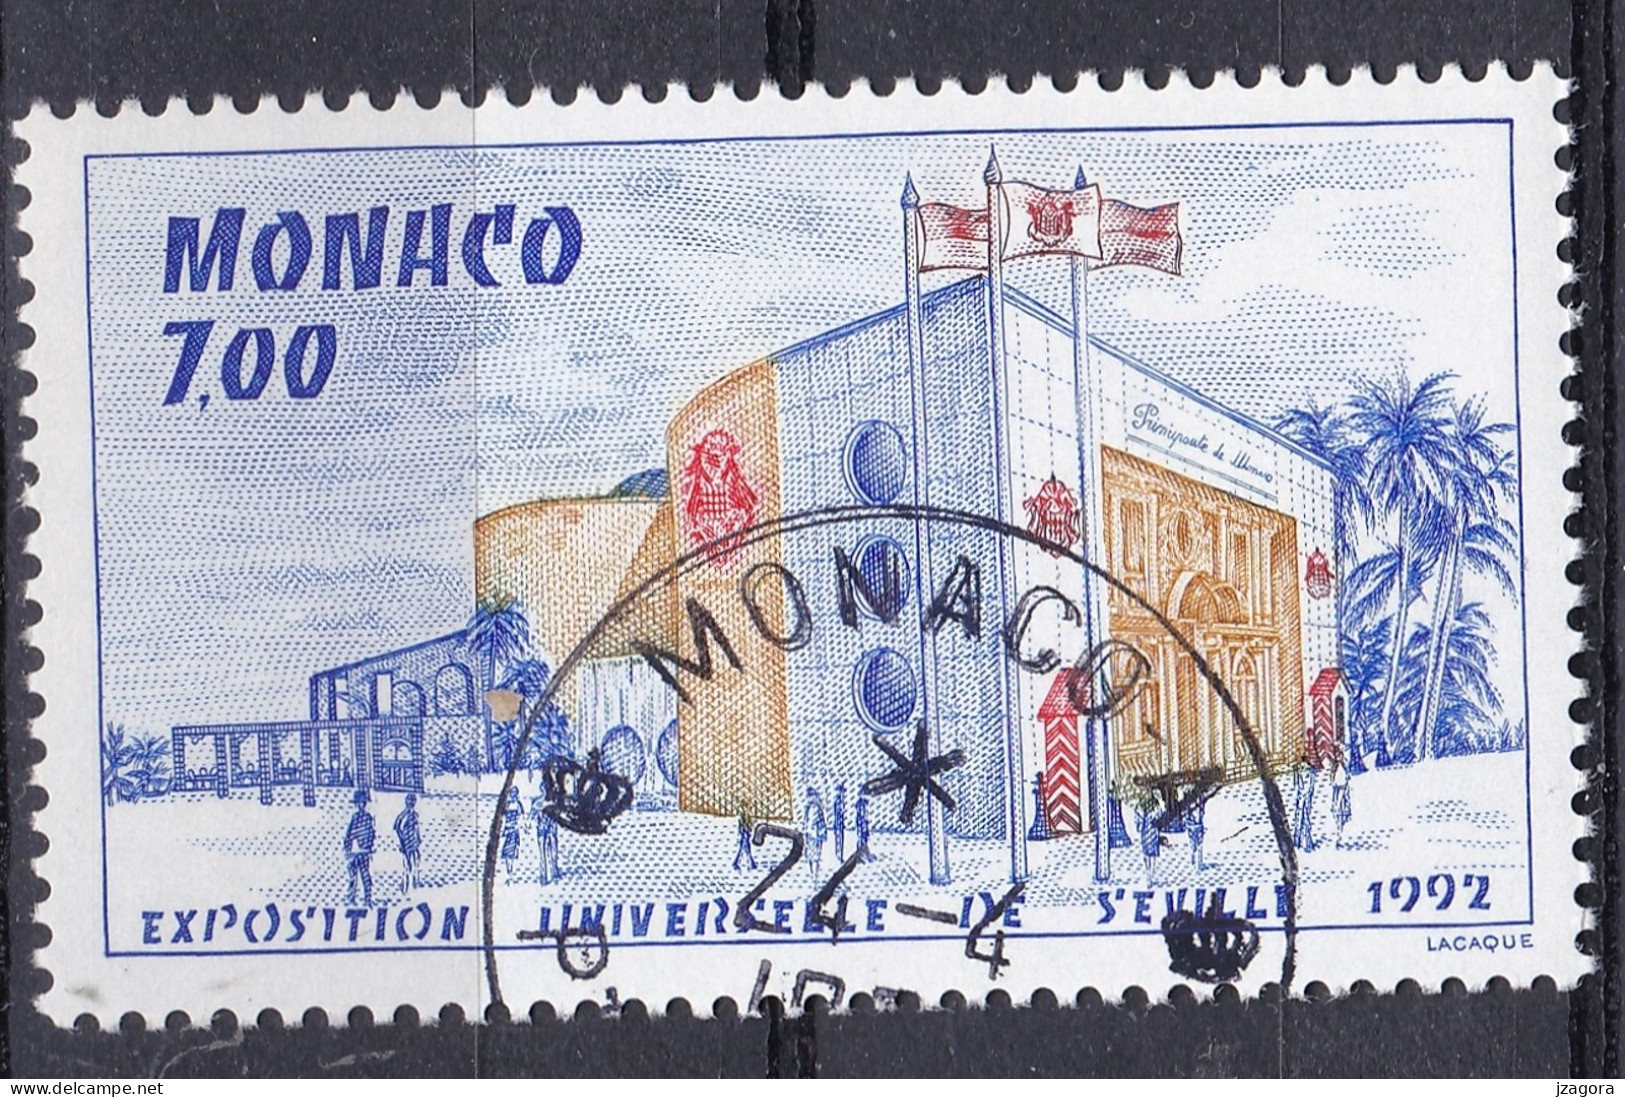 EXPO 1992  EXHIBITION SEVILLA SPAIN - MONACO 2000 MI 2502 USED NH WITH GUM - 1992 – Séville (Espagne)